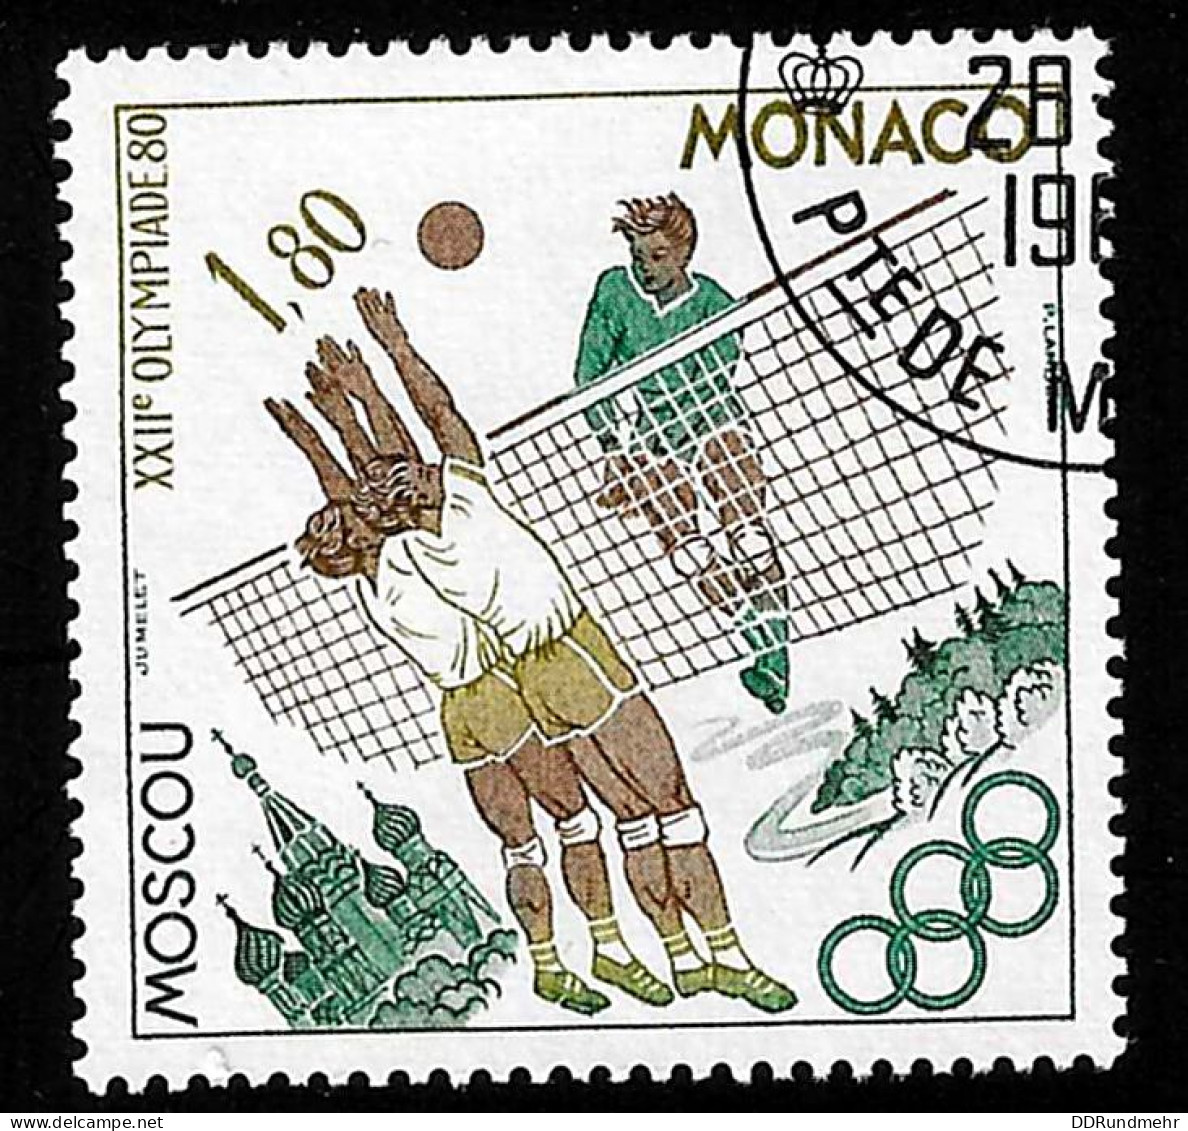 1980  Volleyball Michel MC 1418 Stamp Number MC 1224 Yvert Et Tellier MC 1221 Stanley Gibbons MC 1438 Used - Gebraucht